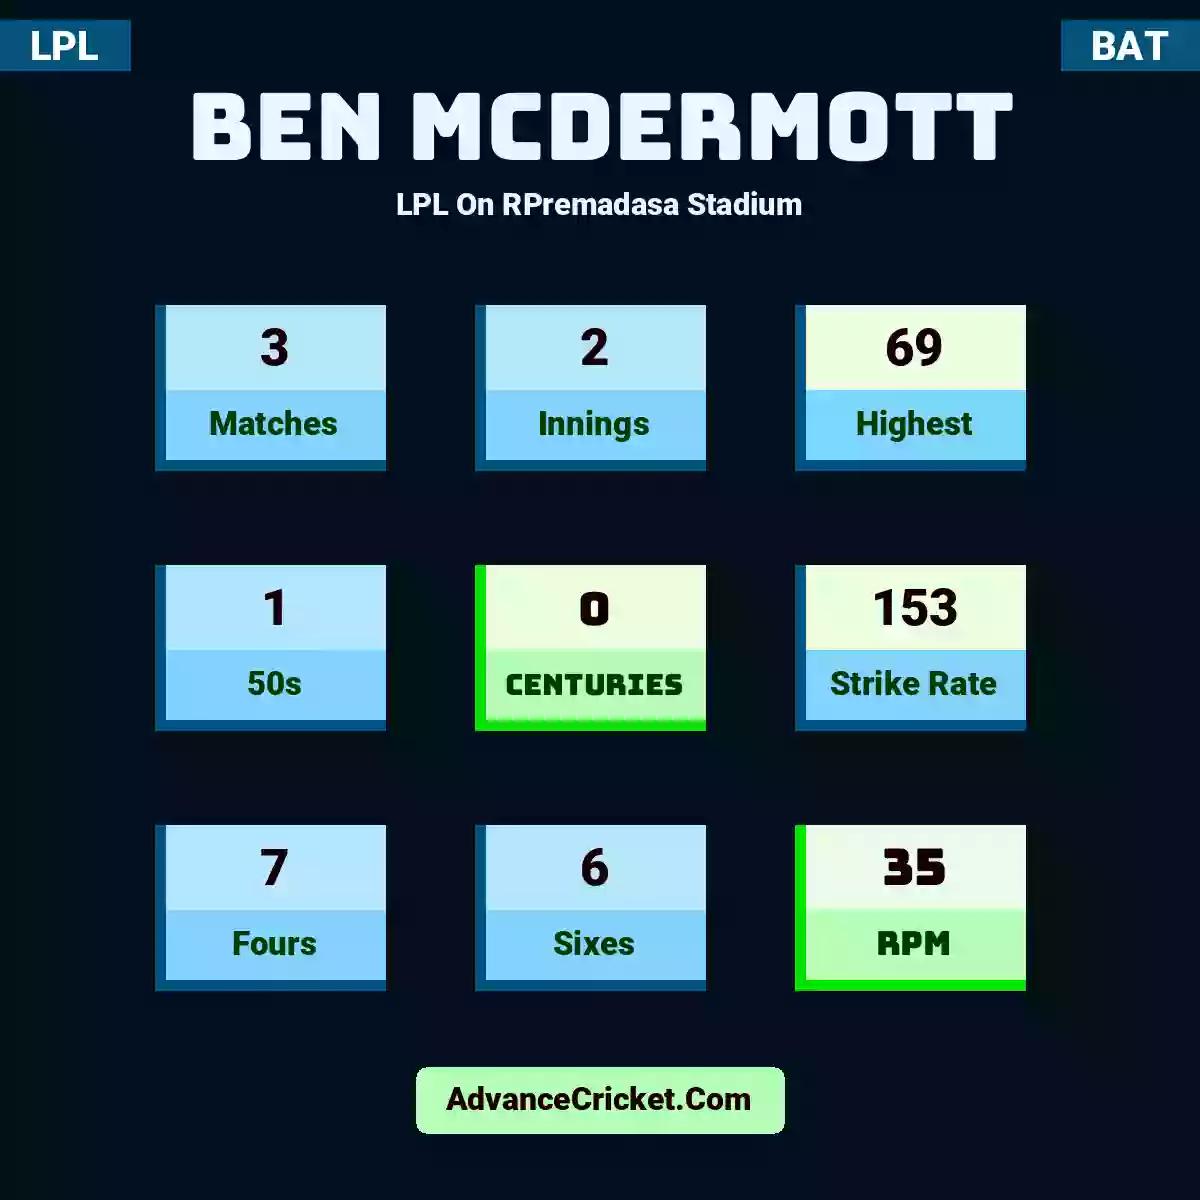 Ben McDermott LPL  On RPremadasa Stadium, Ben McDermott played 3 matches, scored 69 runs as highest, 1 half-centuries, and 0 centuries, with a strike rate of 153. B.McDermott hit 7 fours and 6 sixes, with an RPM of 35.